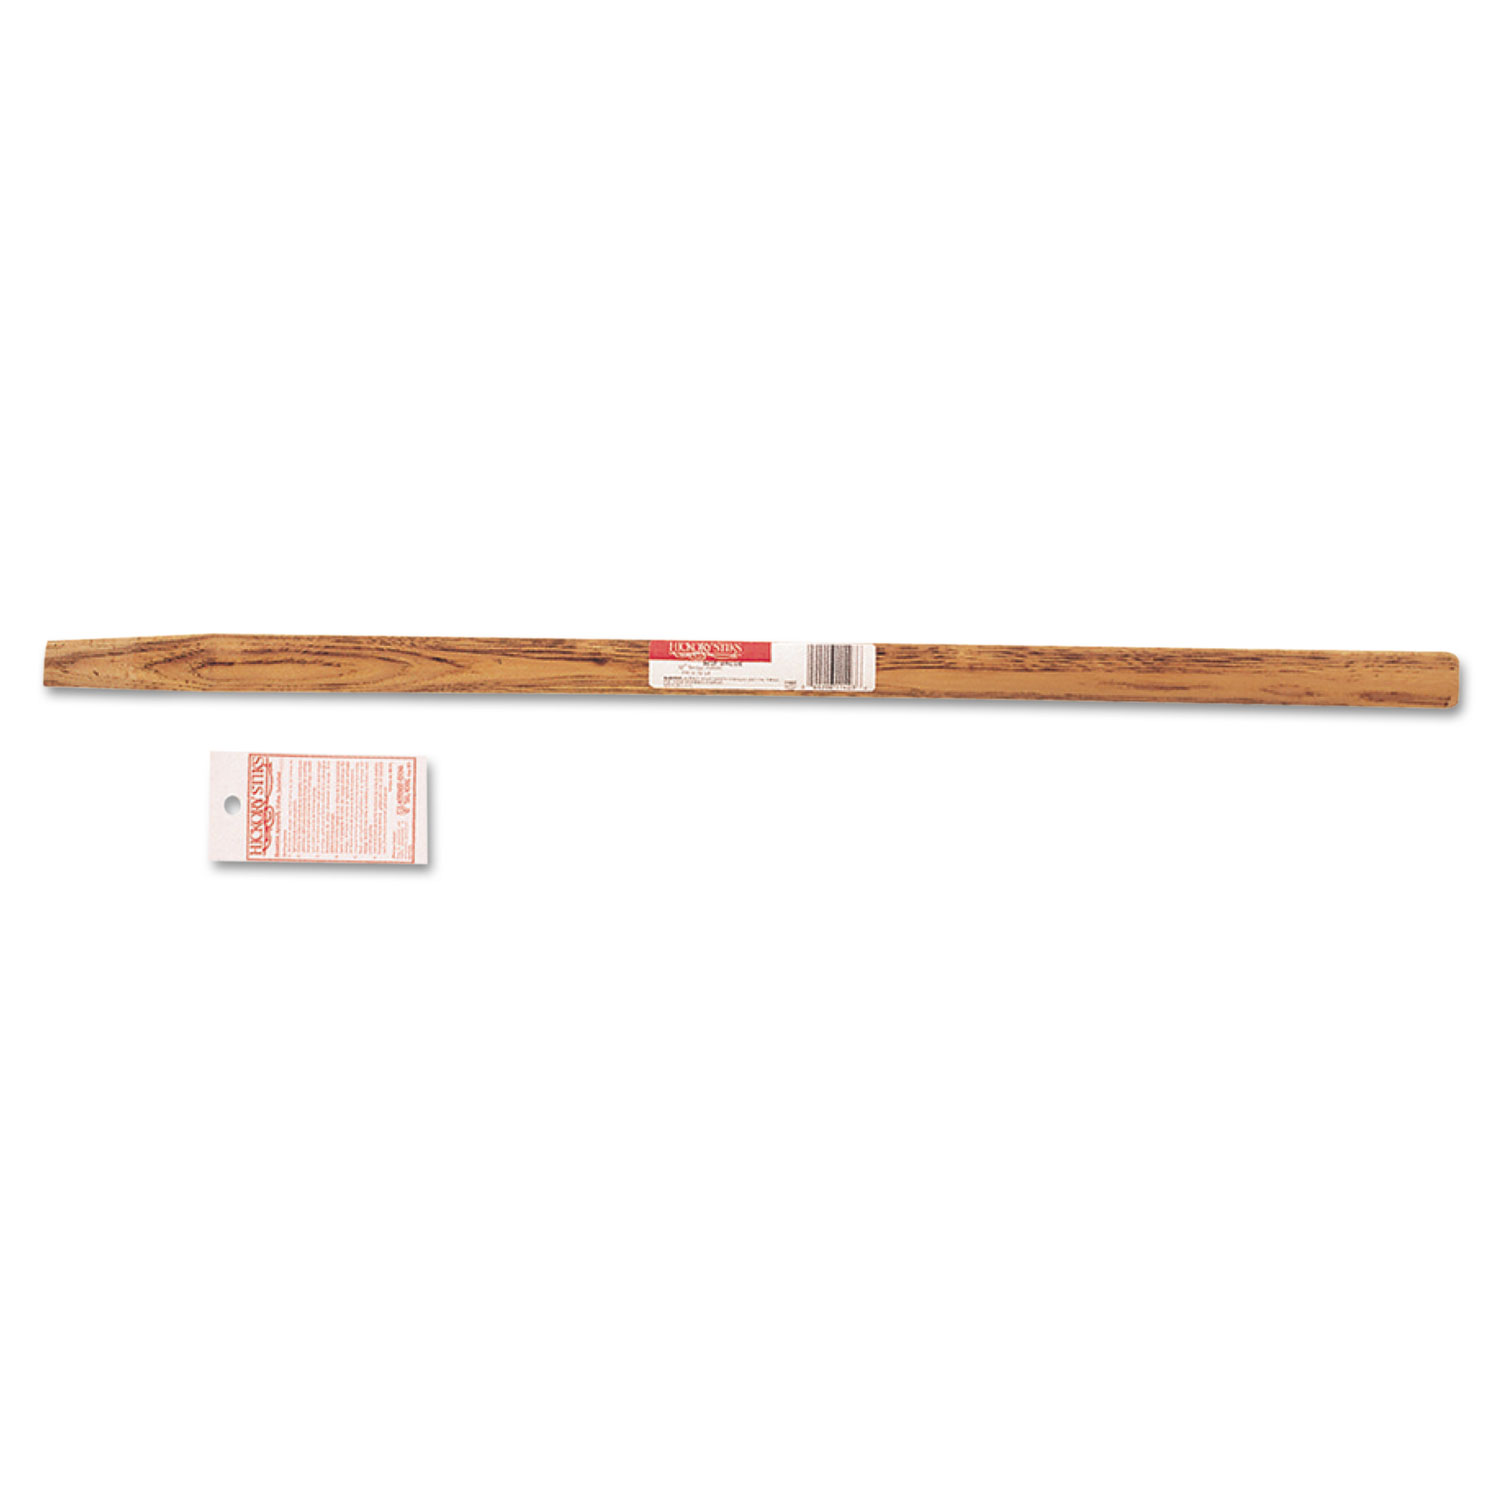 Hickory Hammer Handle, Sledge, 36 Long